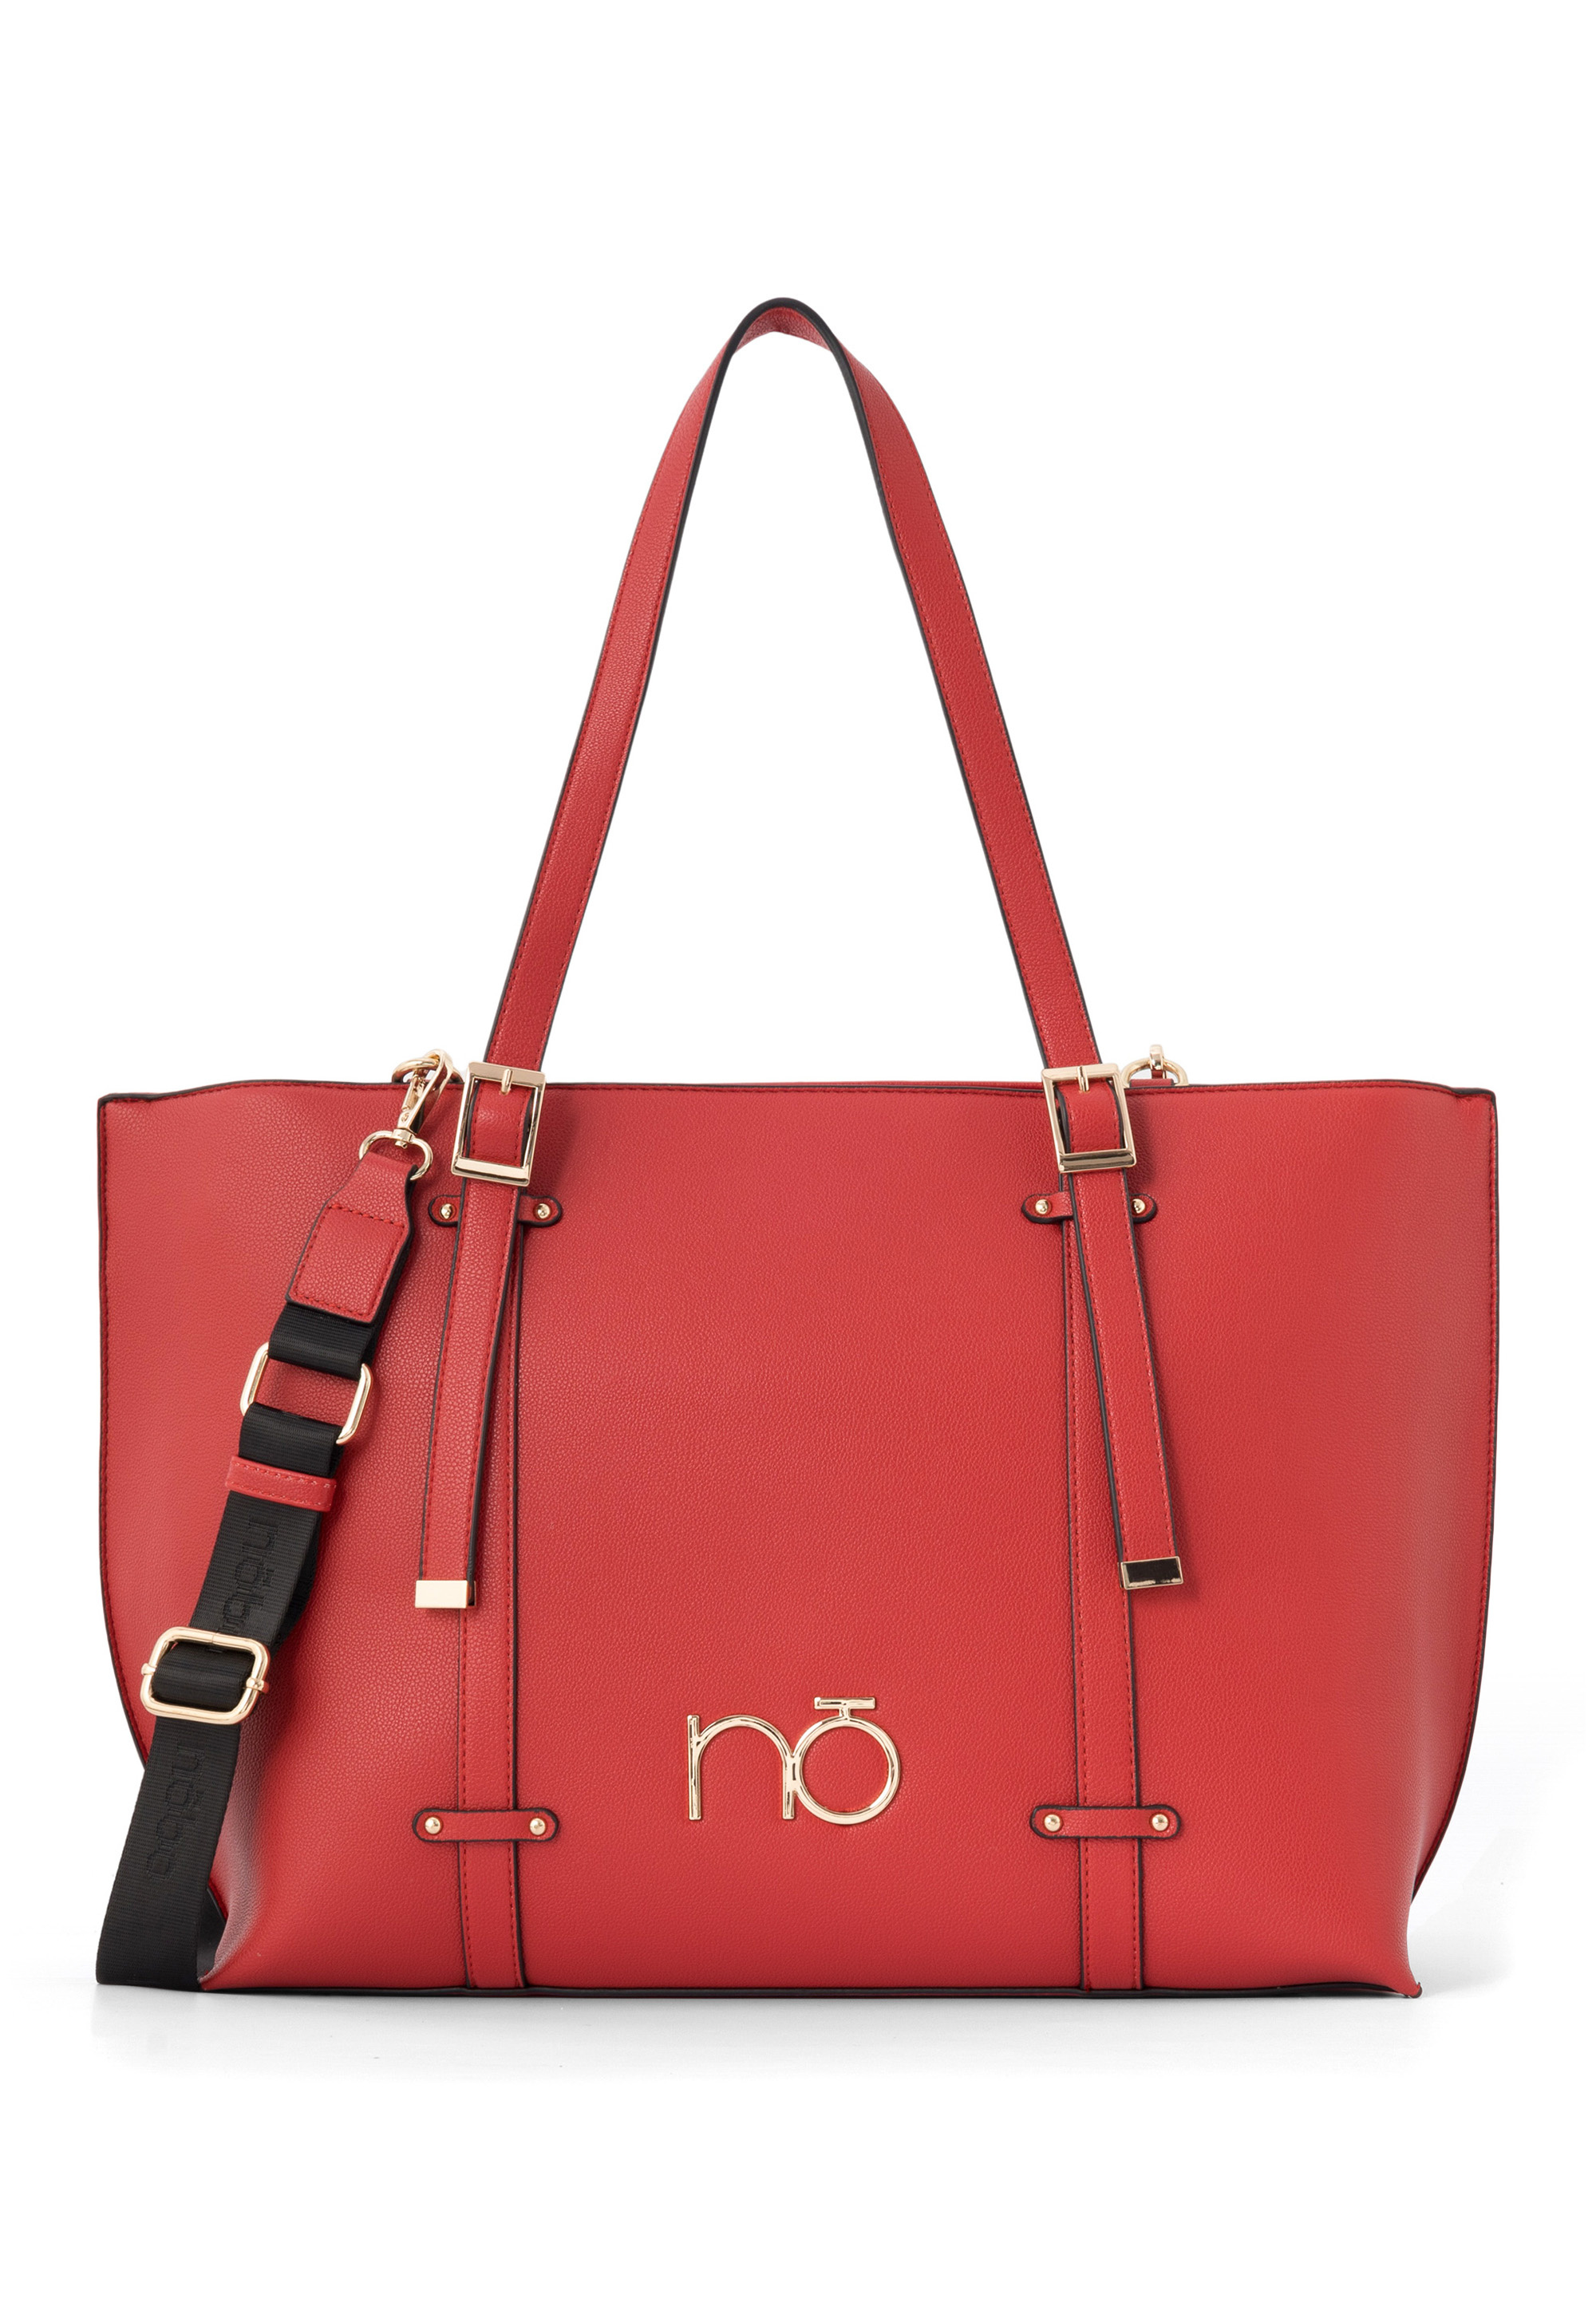 Сумка шоппер Nobo Bags Delicate, красный сумка шоппер nobo bags radiate цвет dark blue